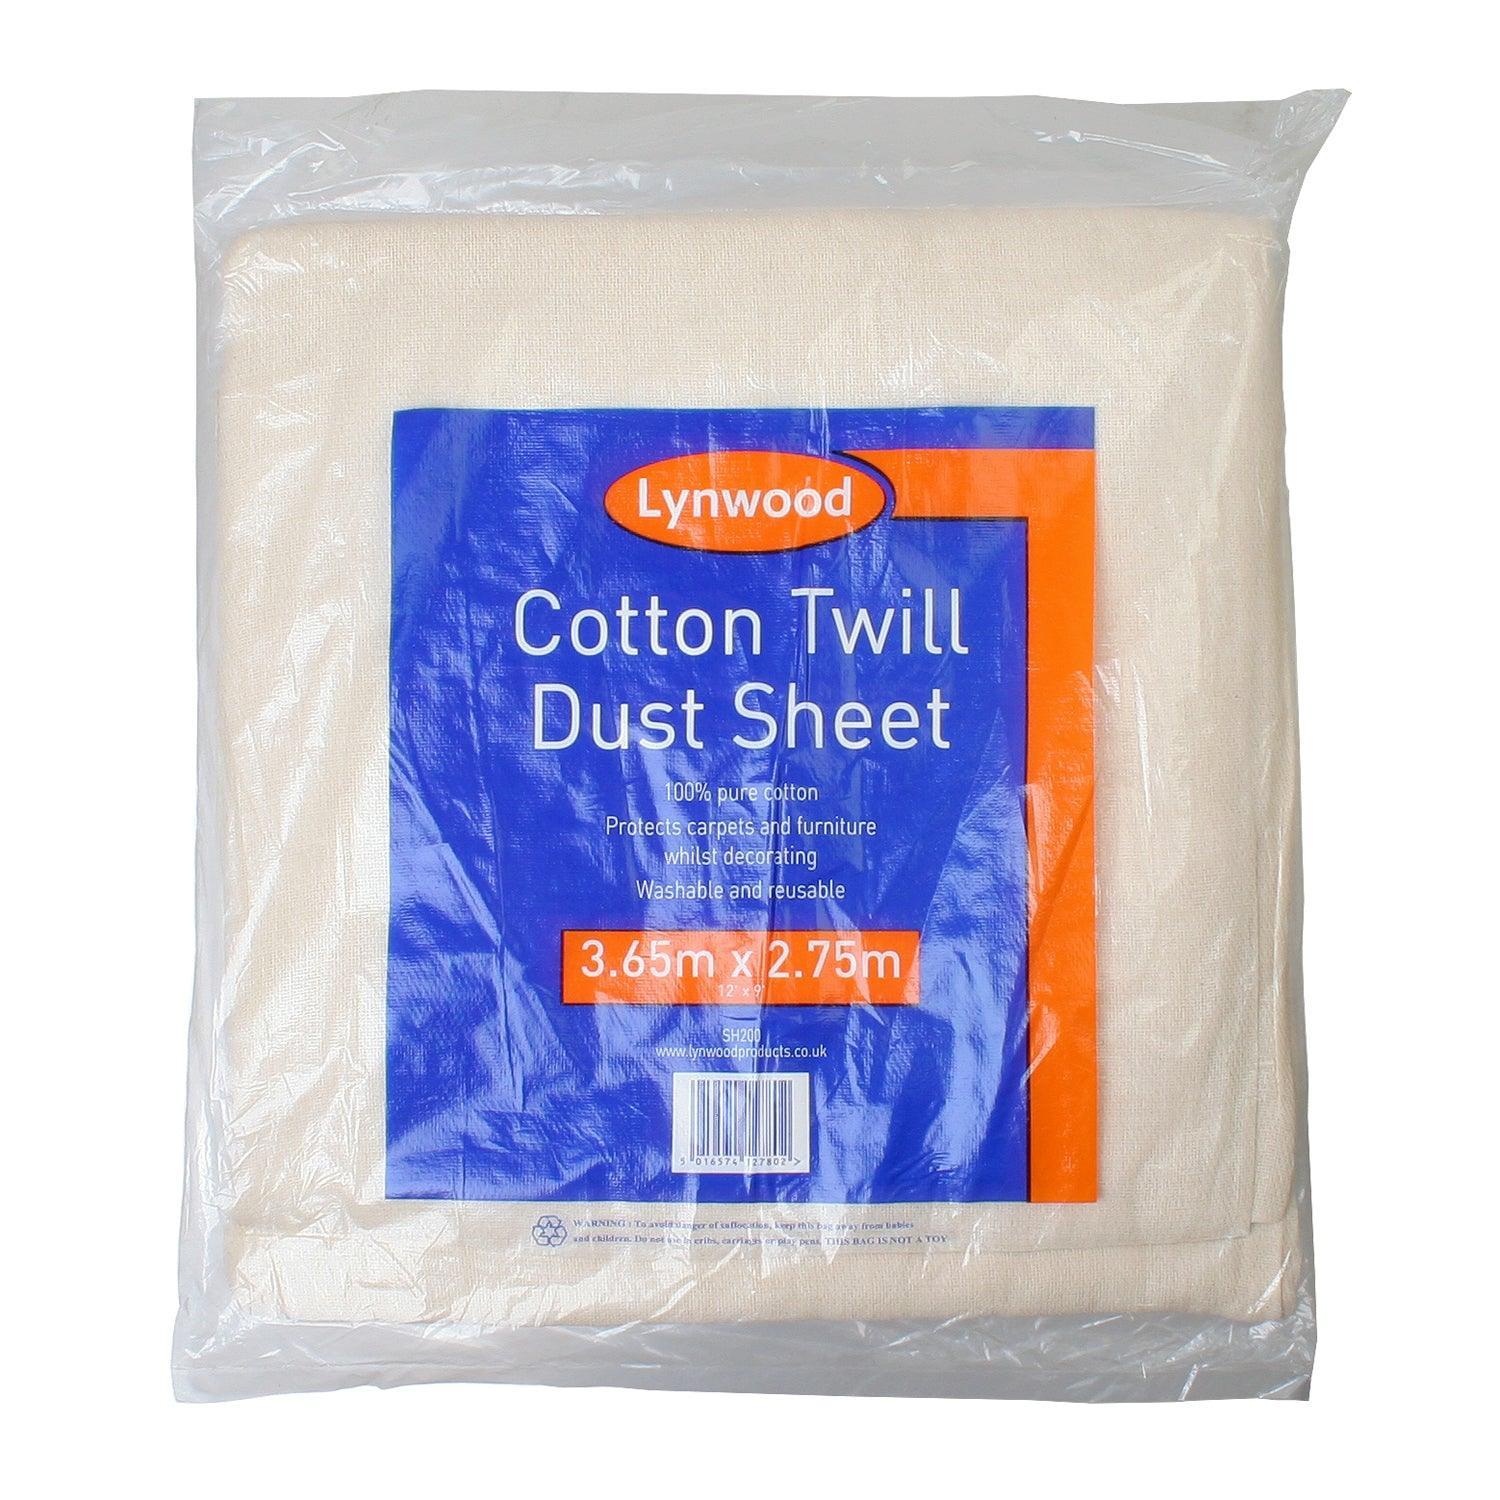 Lynwood Cotton Twill Dust Sheet - Choice Stores